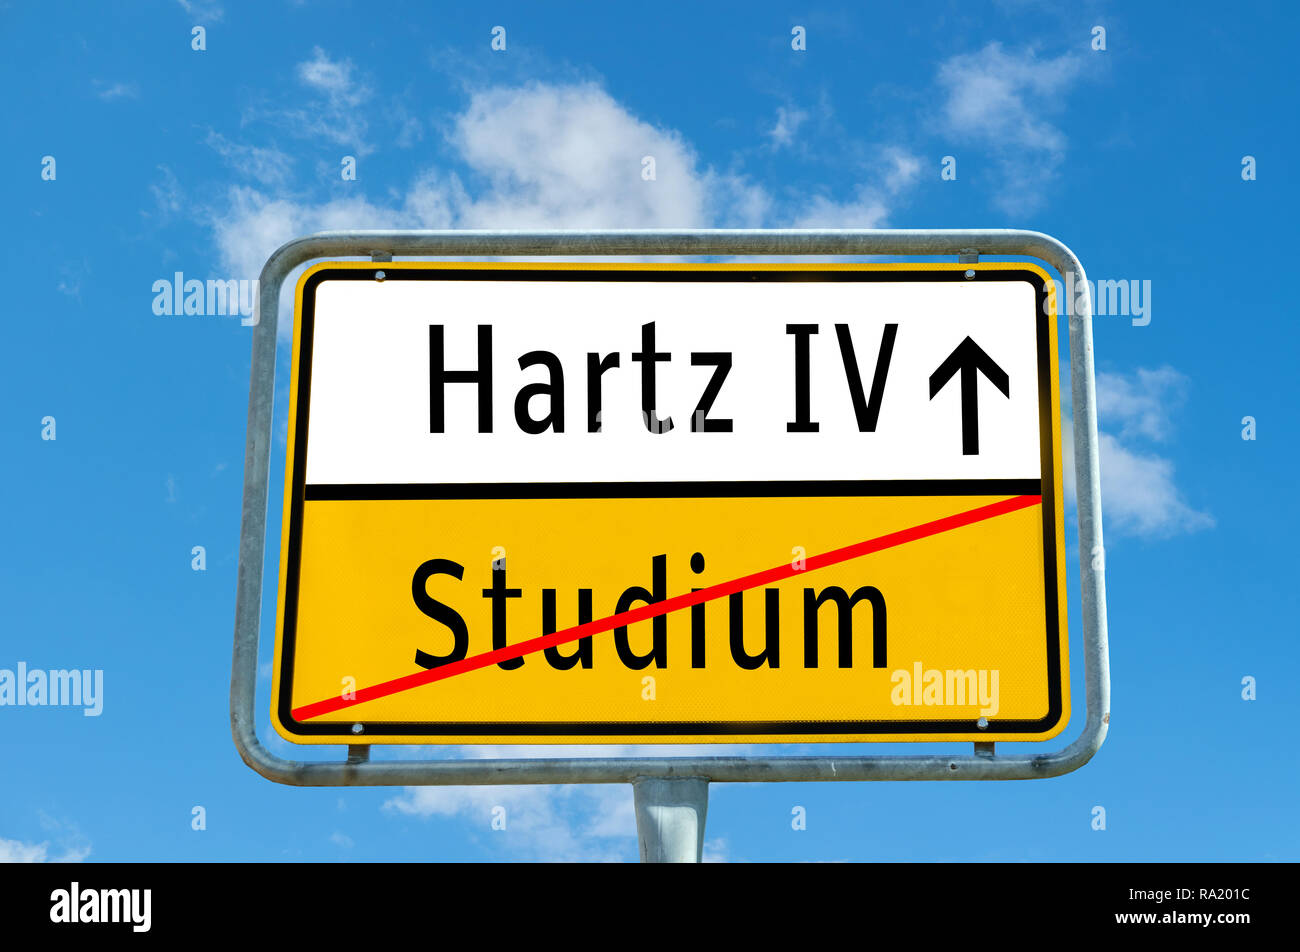 Place-name sign Studium/Hartz IV Stock Photo